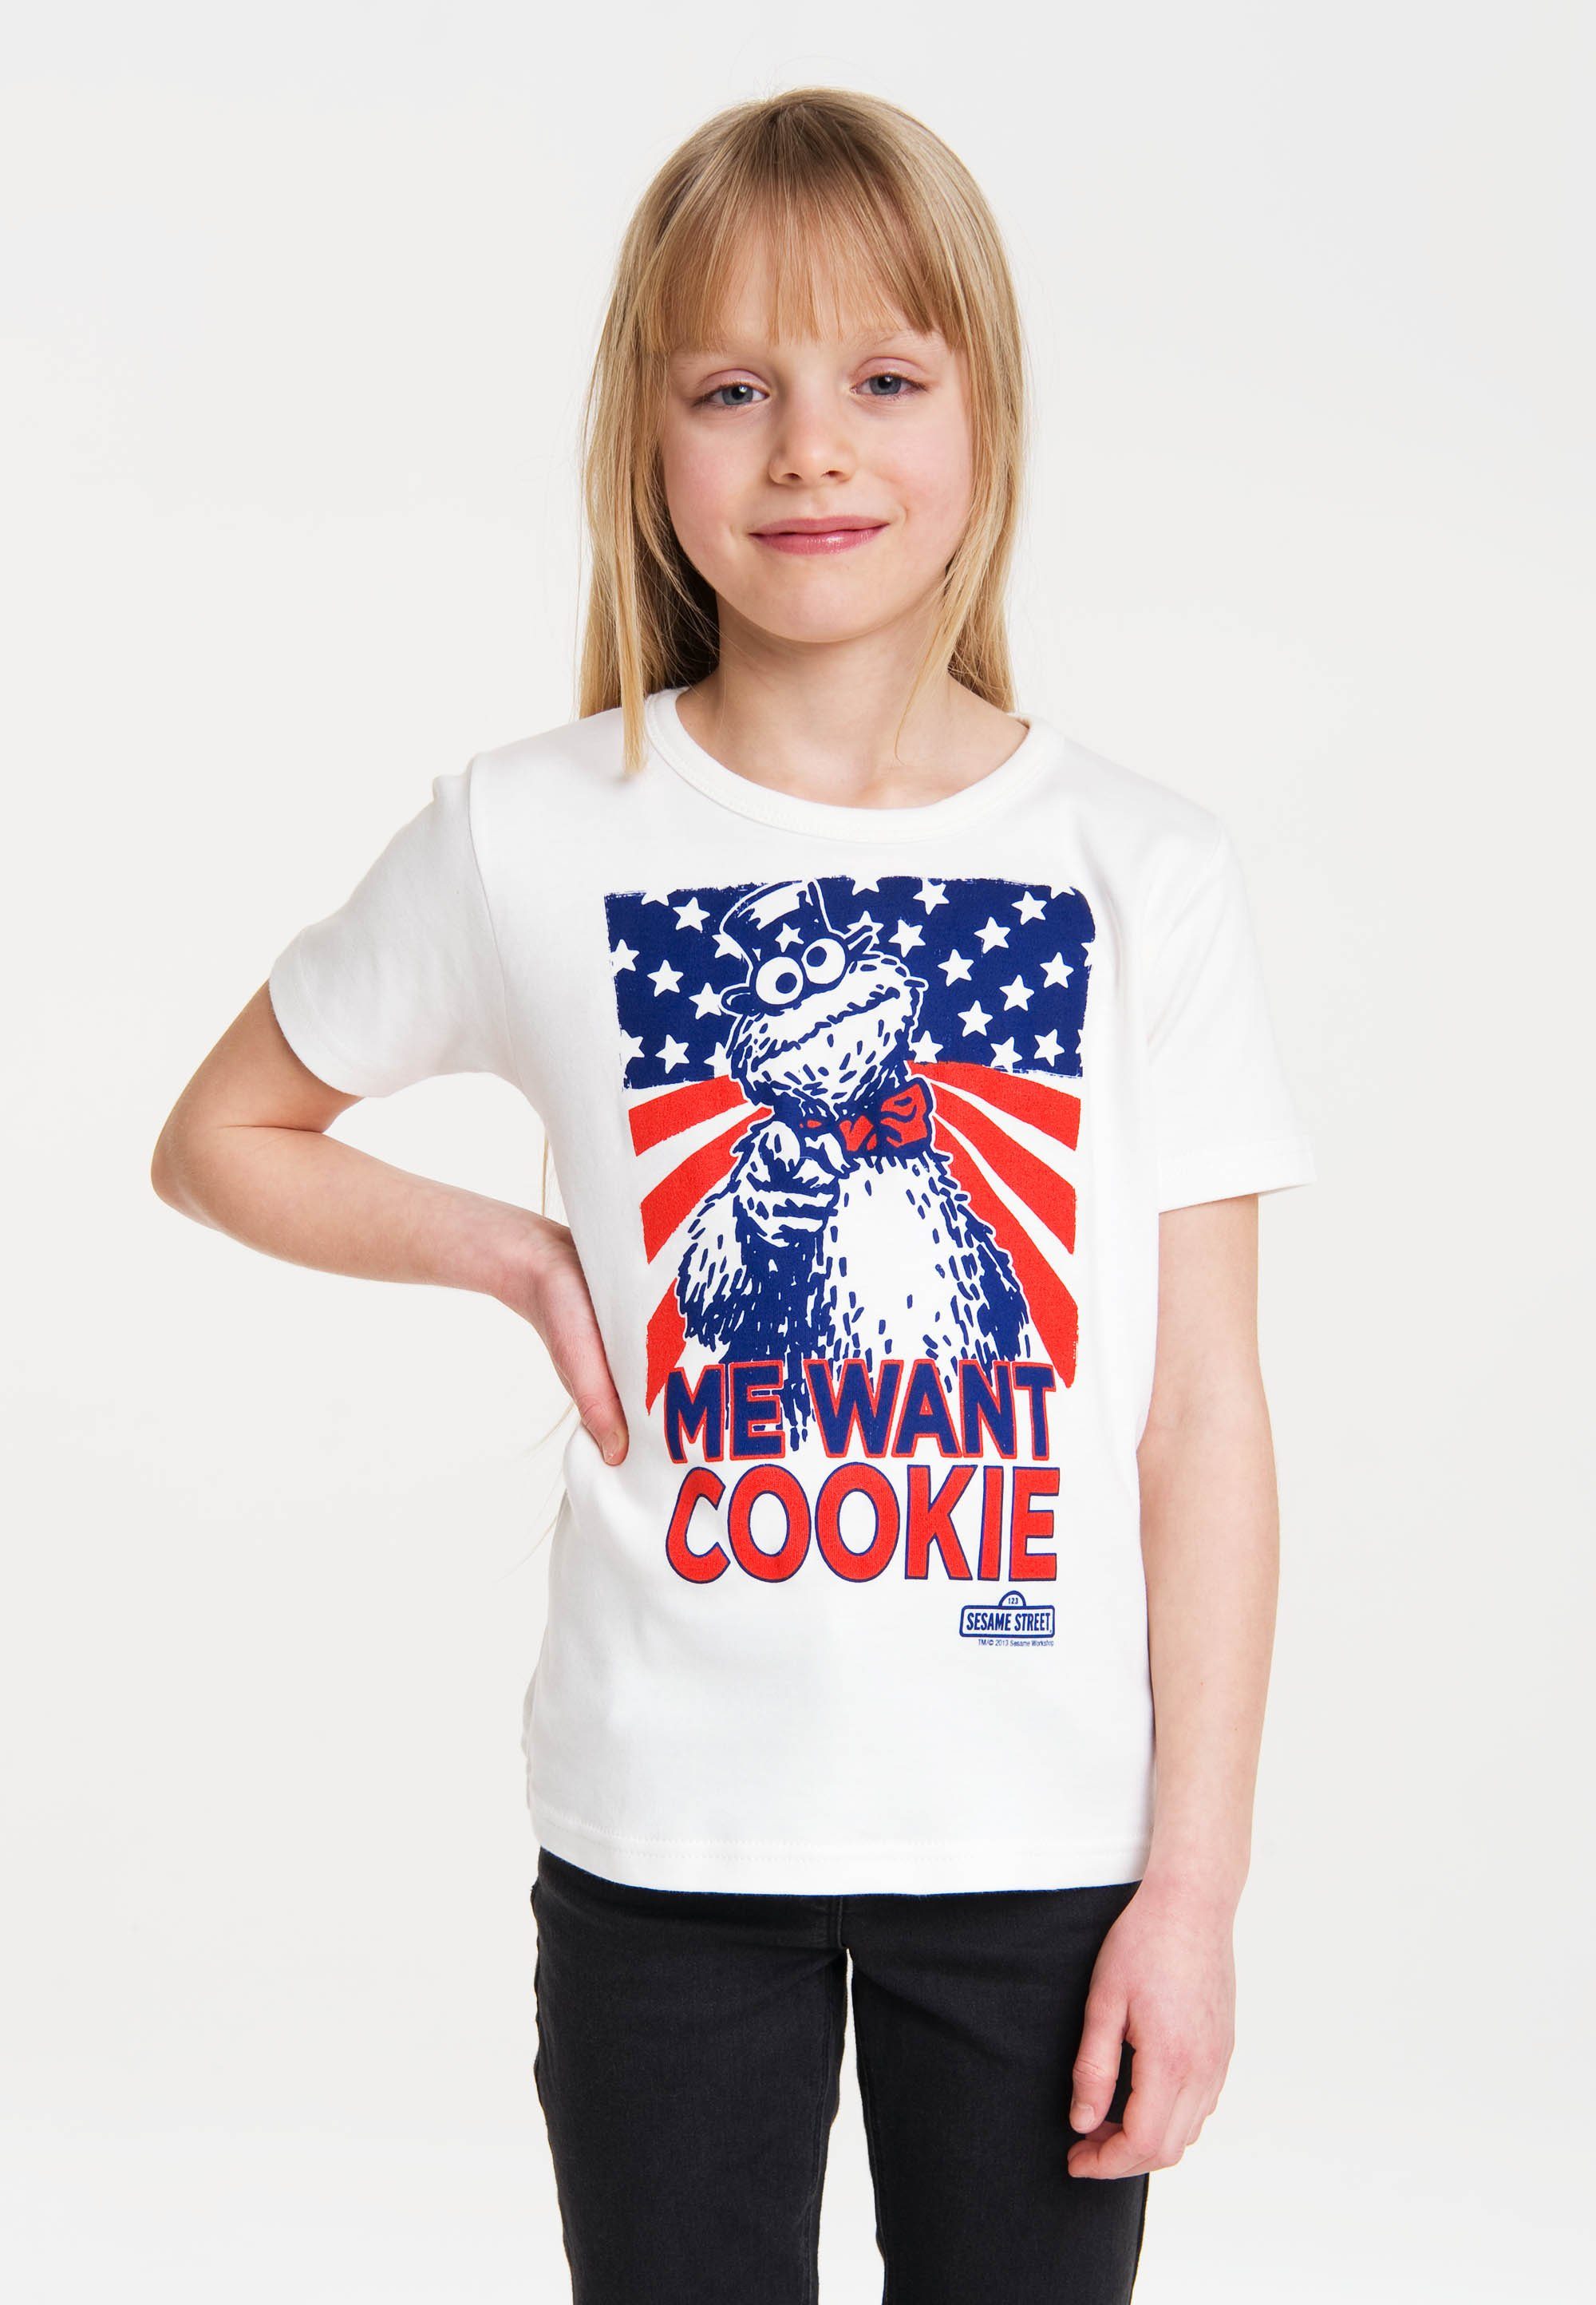 Me Monster Cookie mit Krümelmonster- Cookie LOGOSHIRT Want Frontdruck - coolem T-Shirt